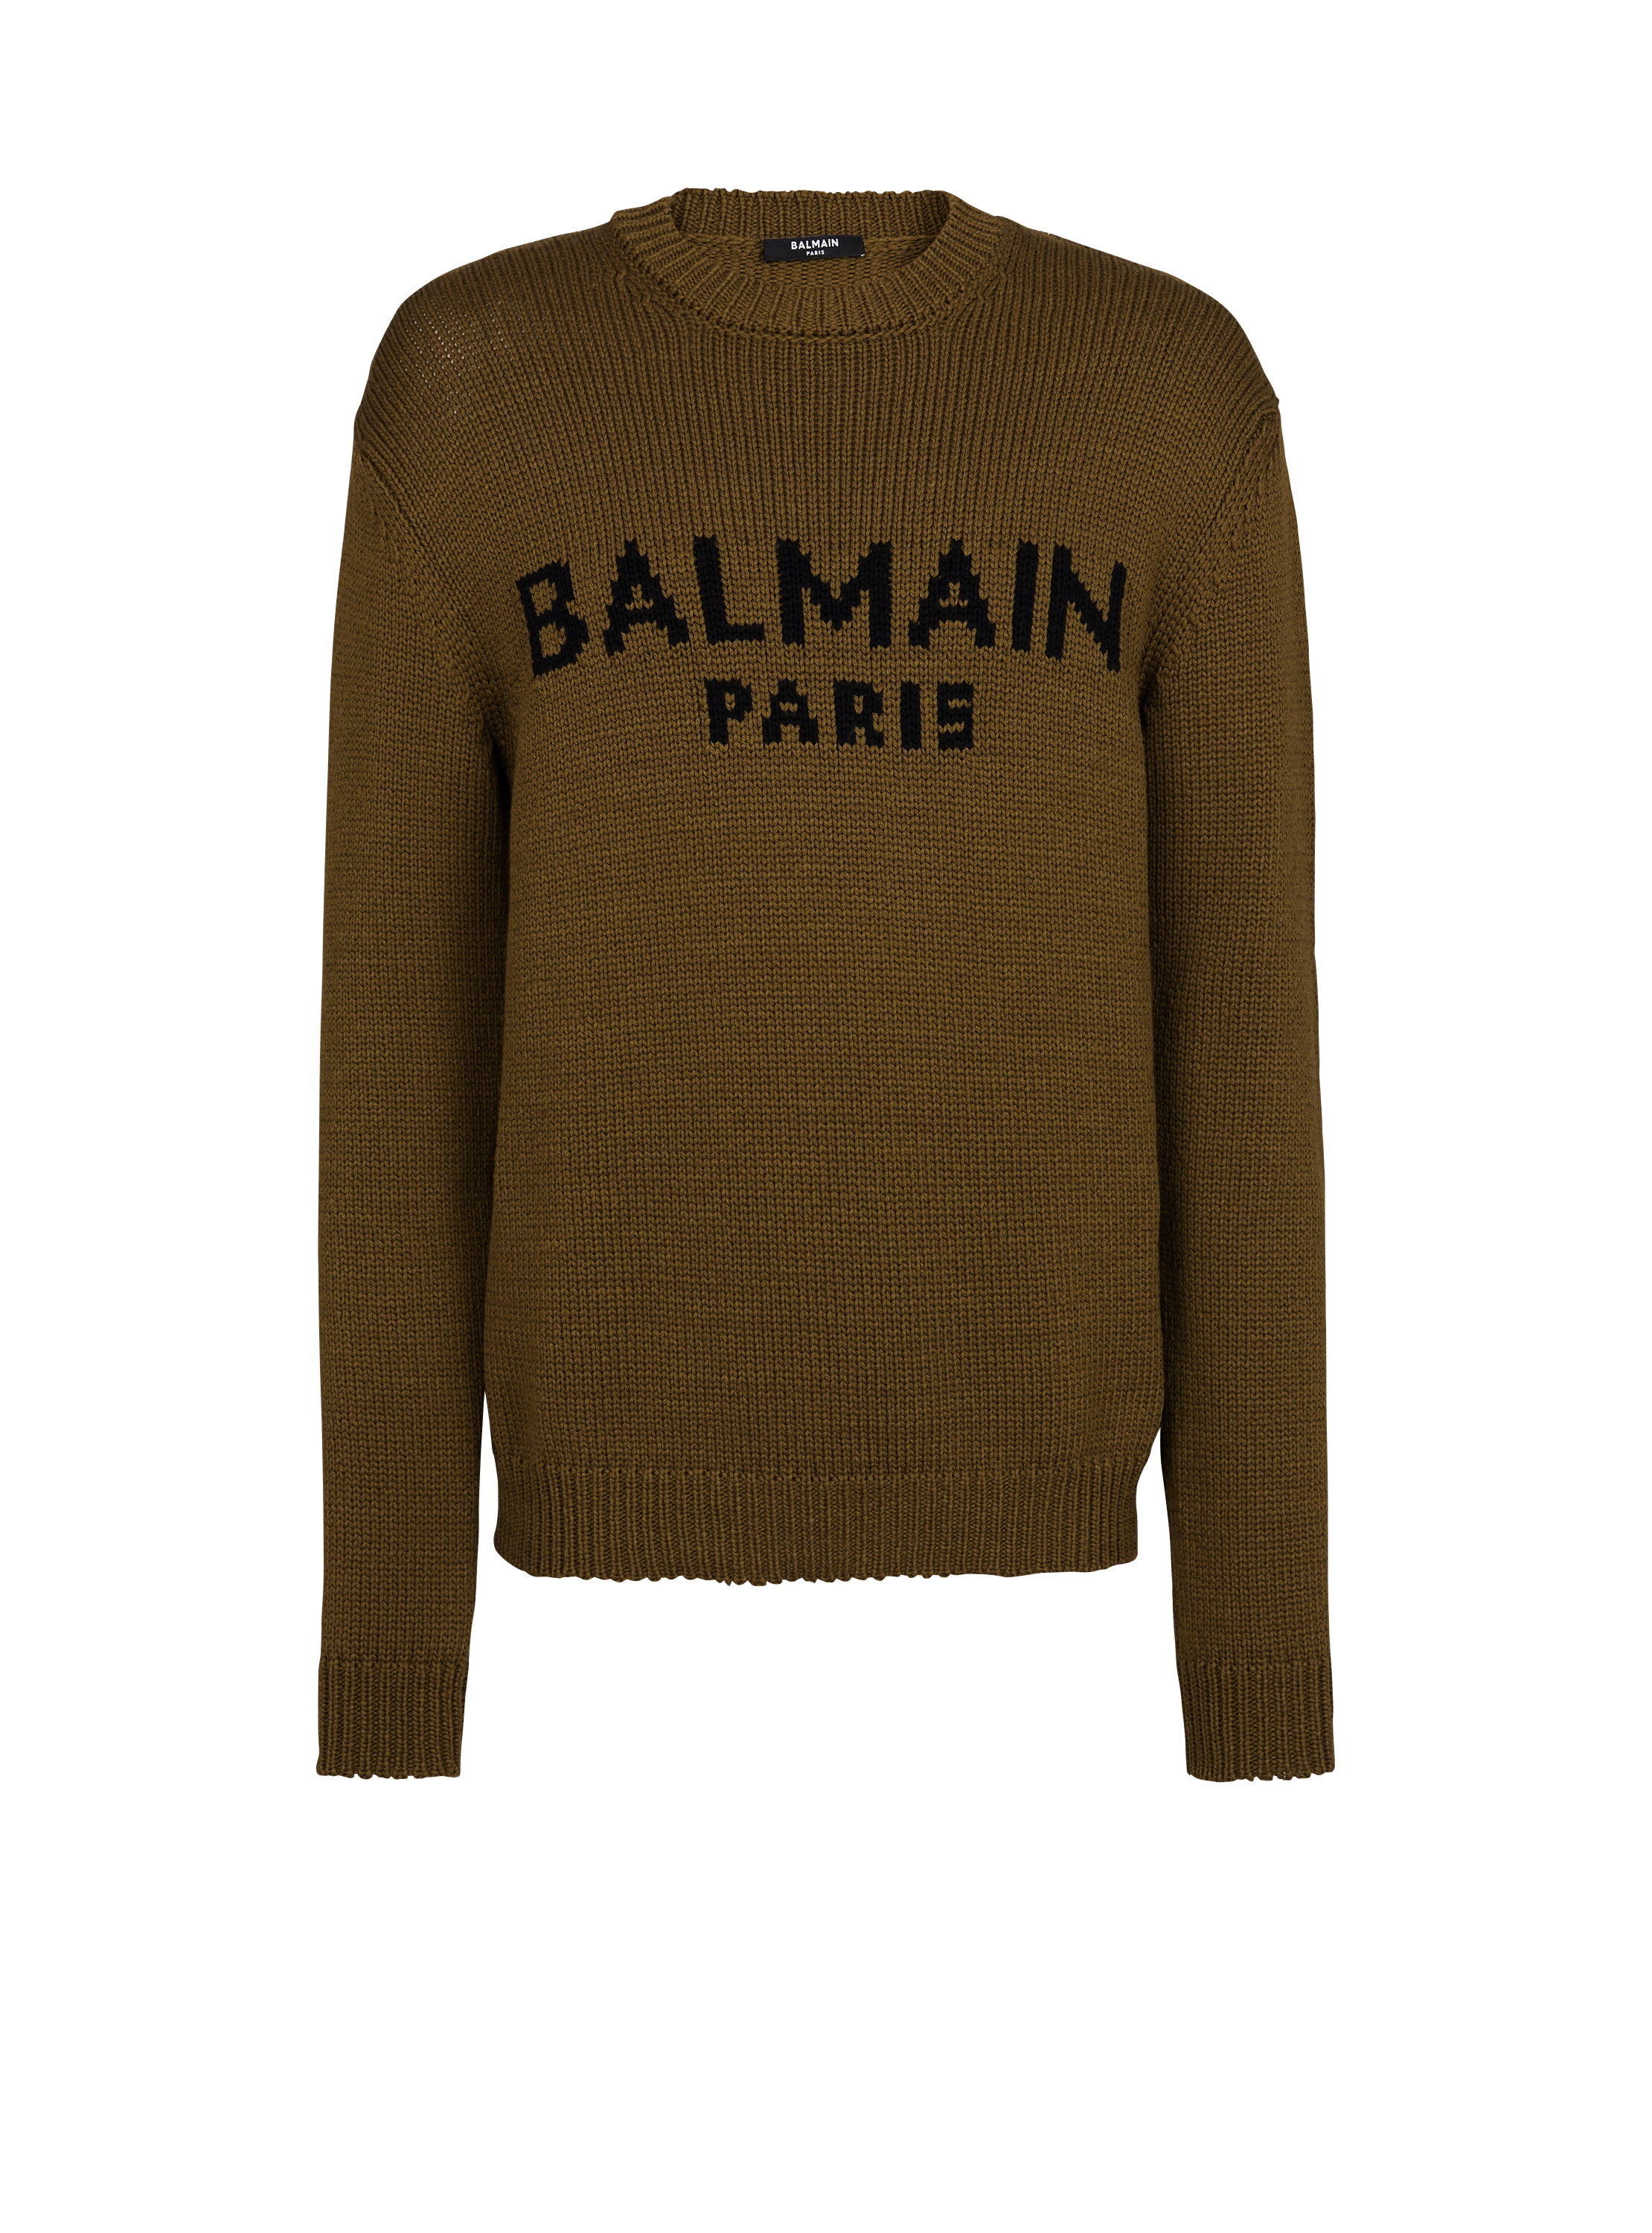 Balmain Paris ウール セーター